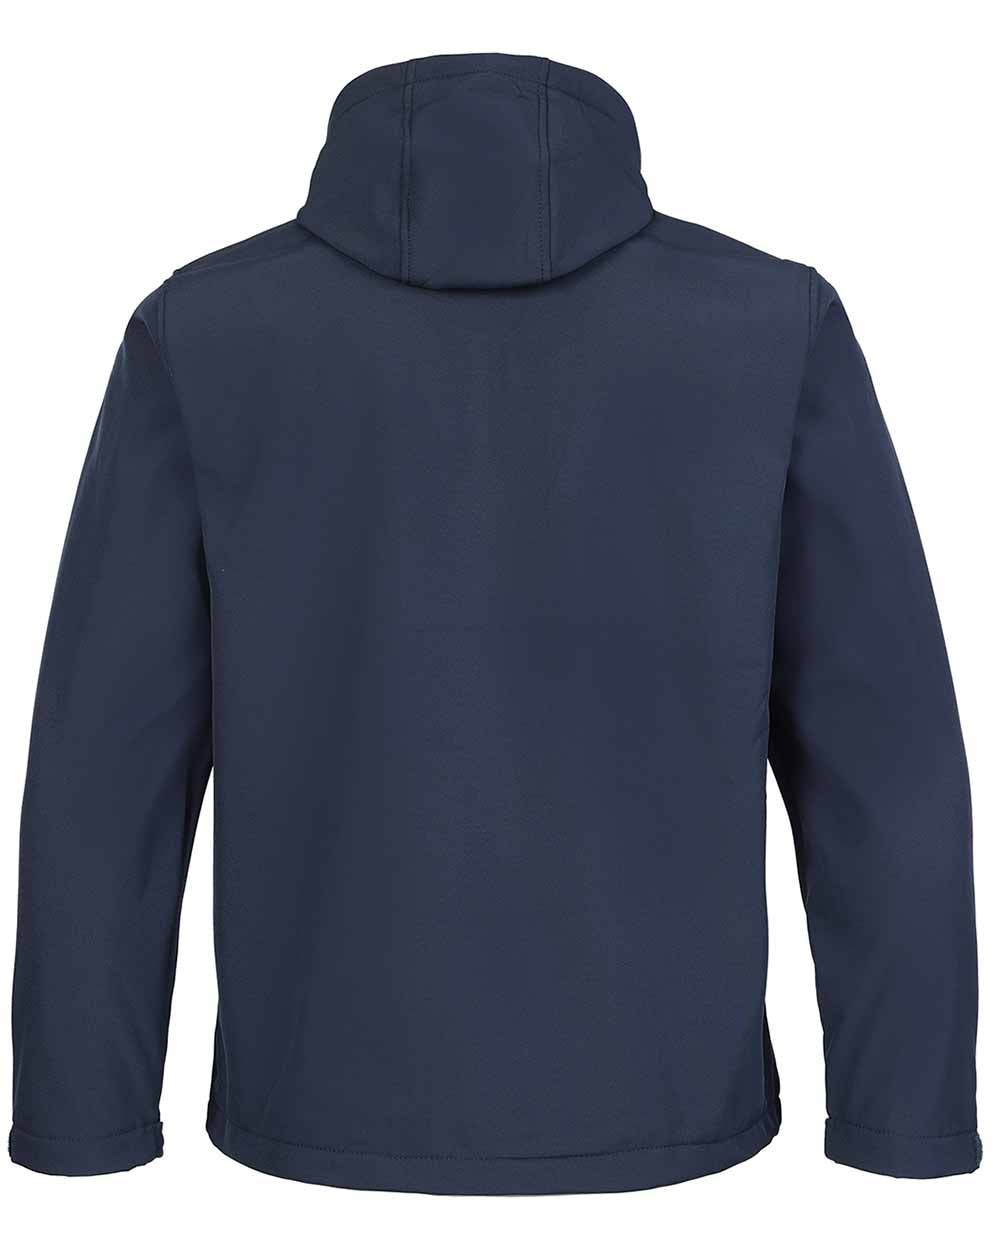 Navy Blue Coloured Fort Holkham Hooded Softshell Jacket On A White Background 